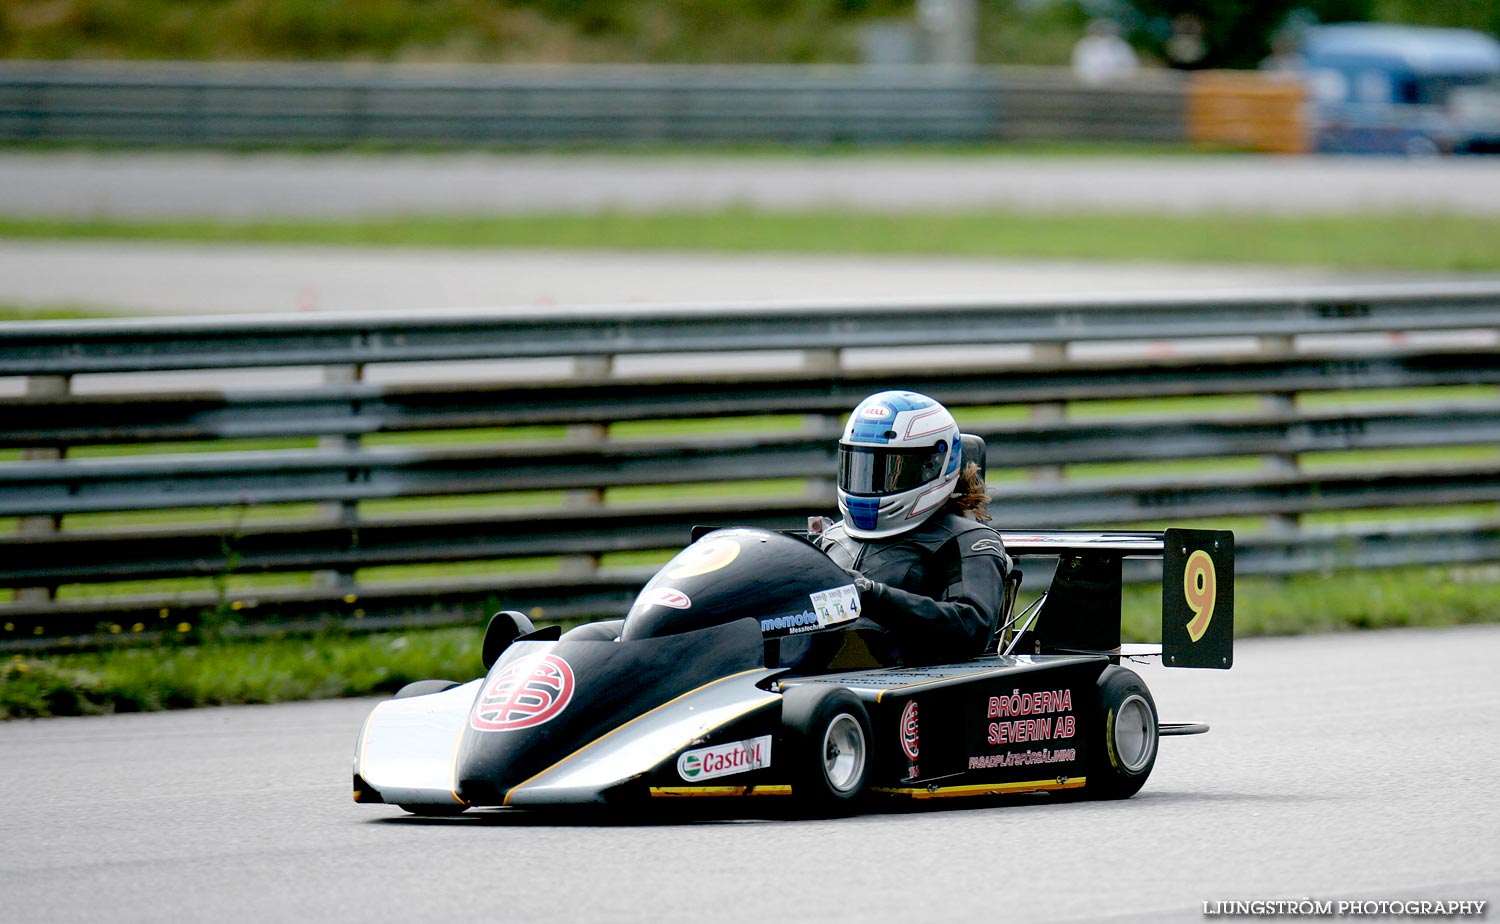 SSK Raceweek,mix,Kinnekulle Ring,Götene,Sverige,Motorsport,,2009,107635